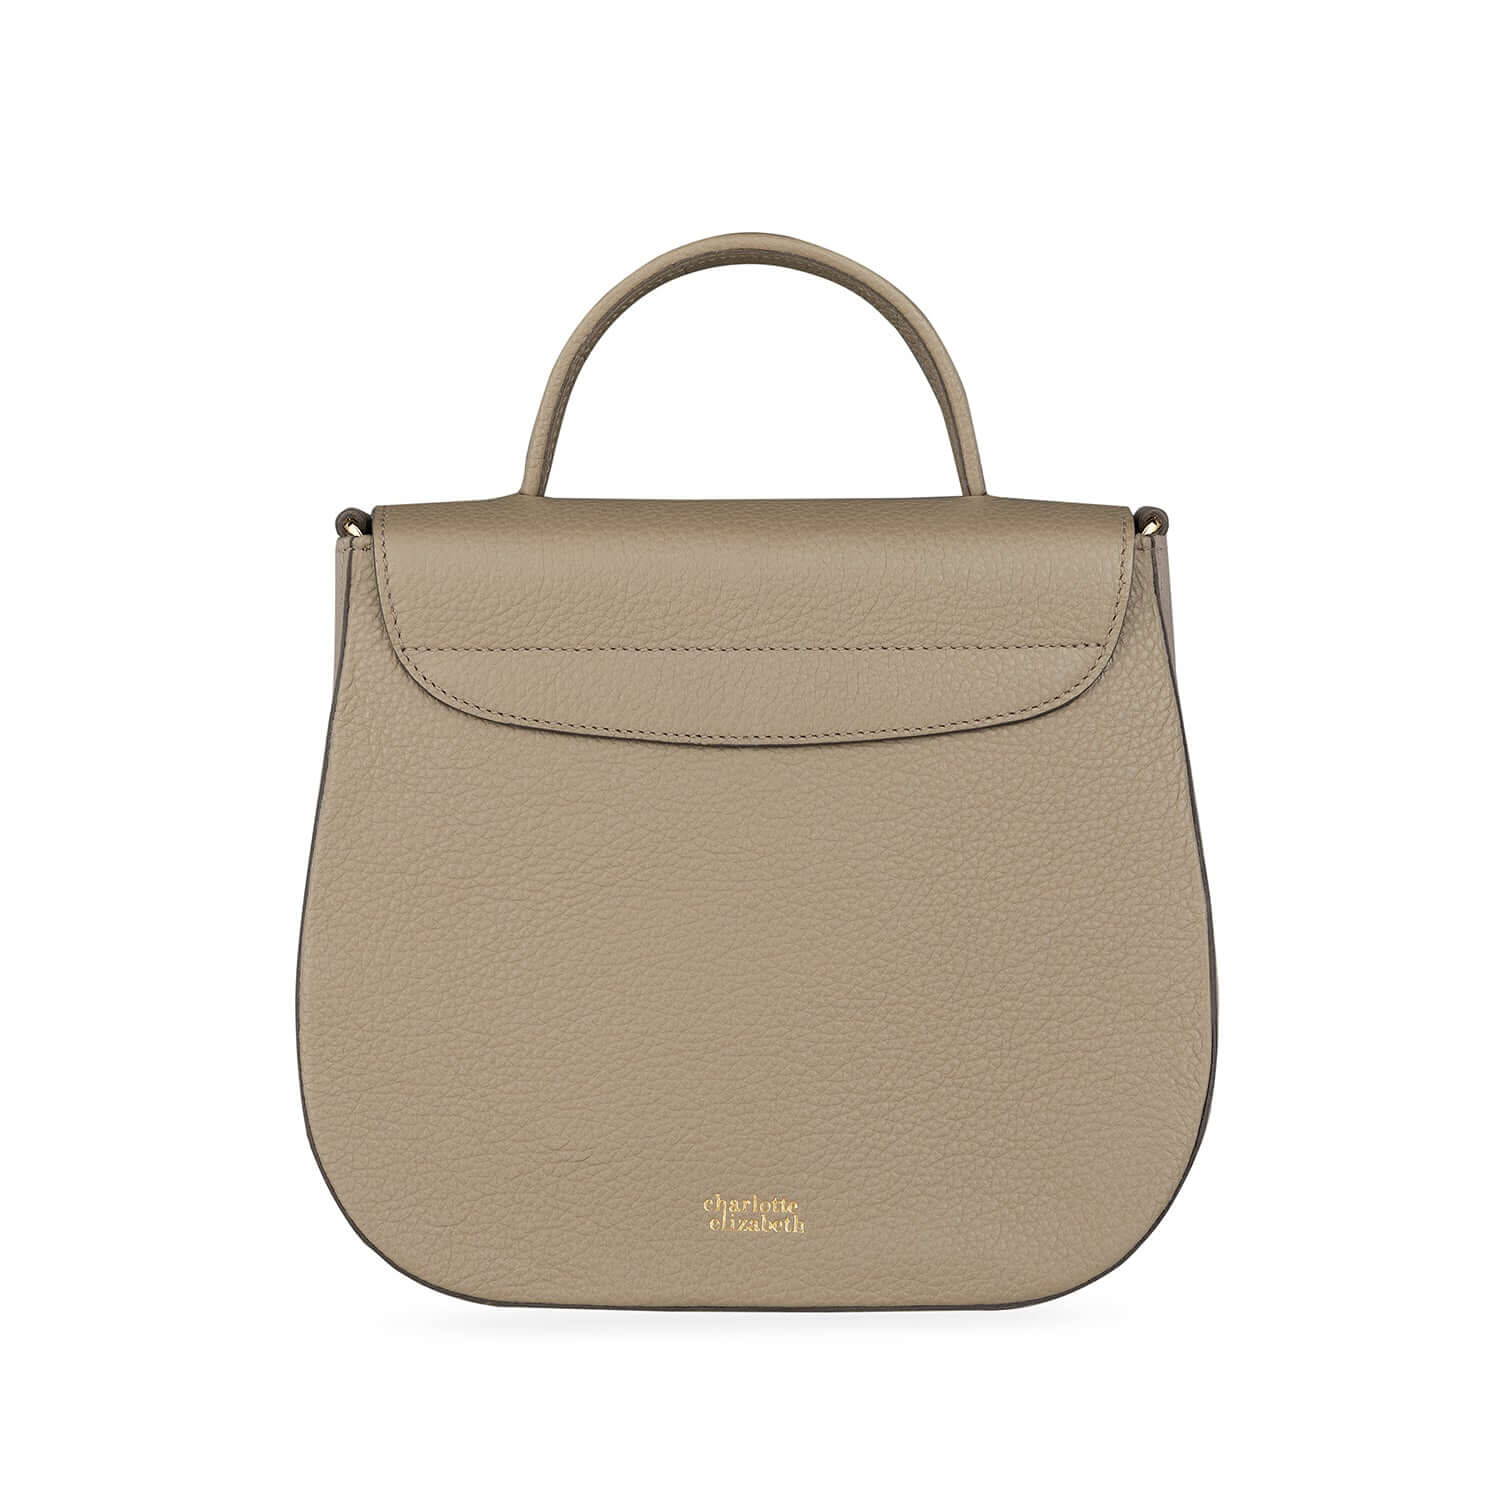 simplistic modern classic cream handbag leather